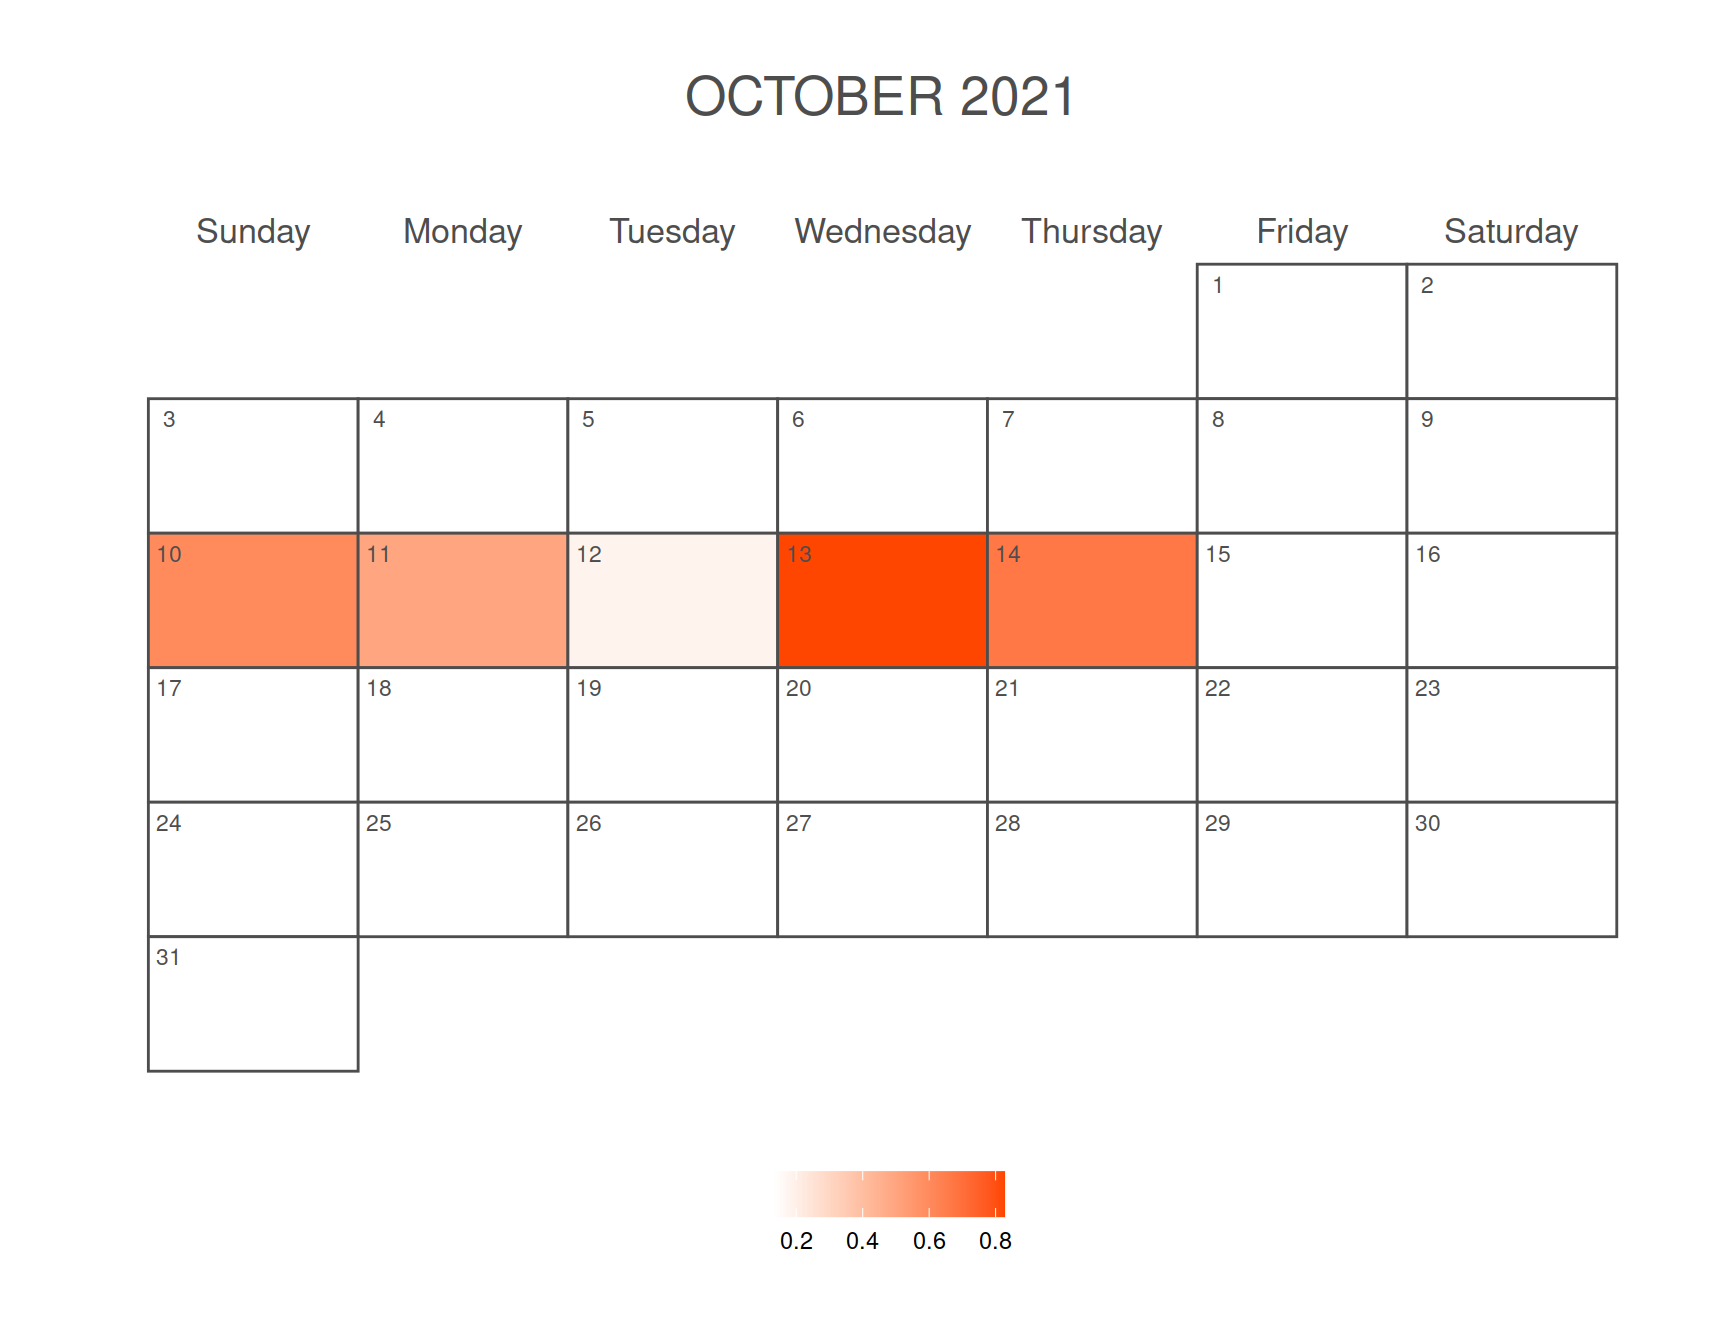 Monthly calendar heatmap in ggplot2